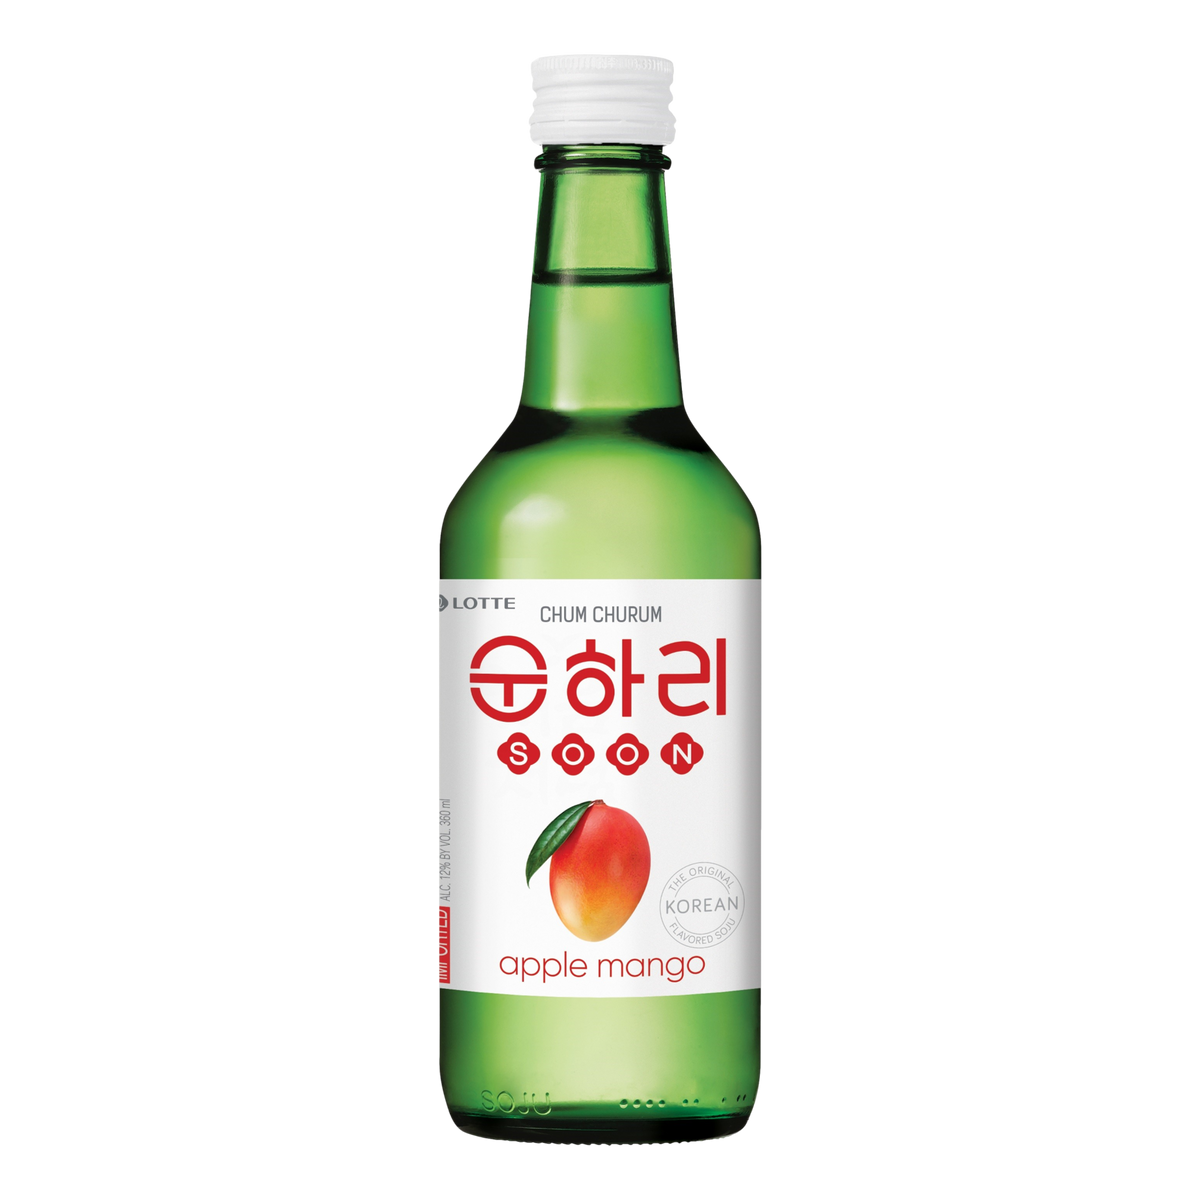 Lotte Chum Churum Apple Mango Soju 360ml Bottle Single